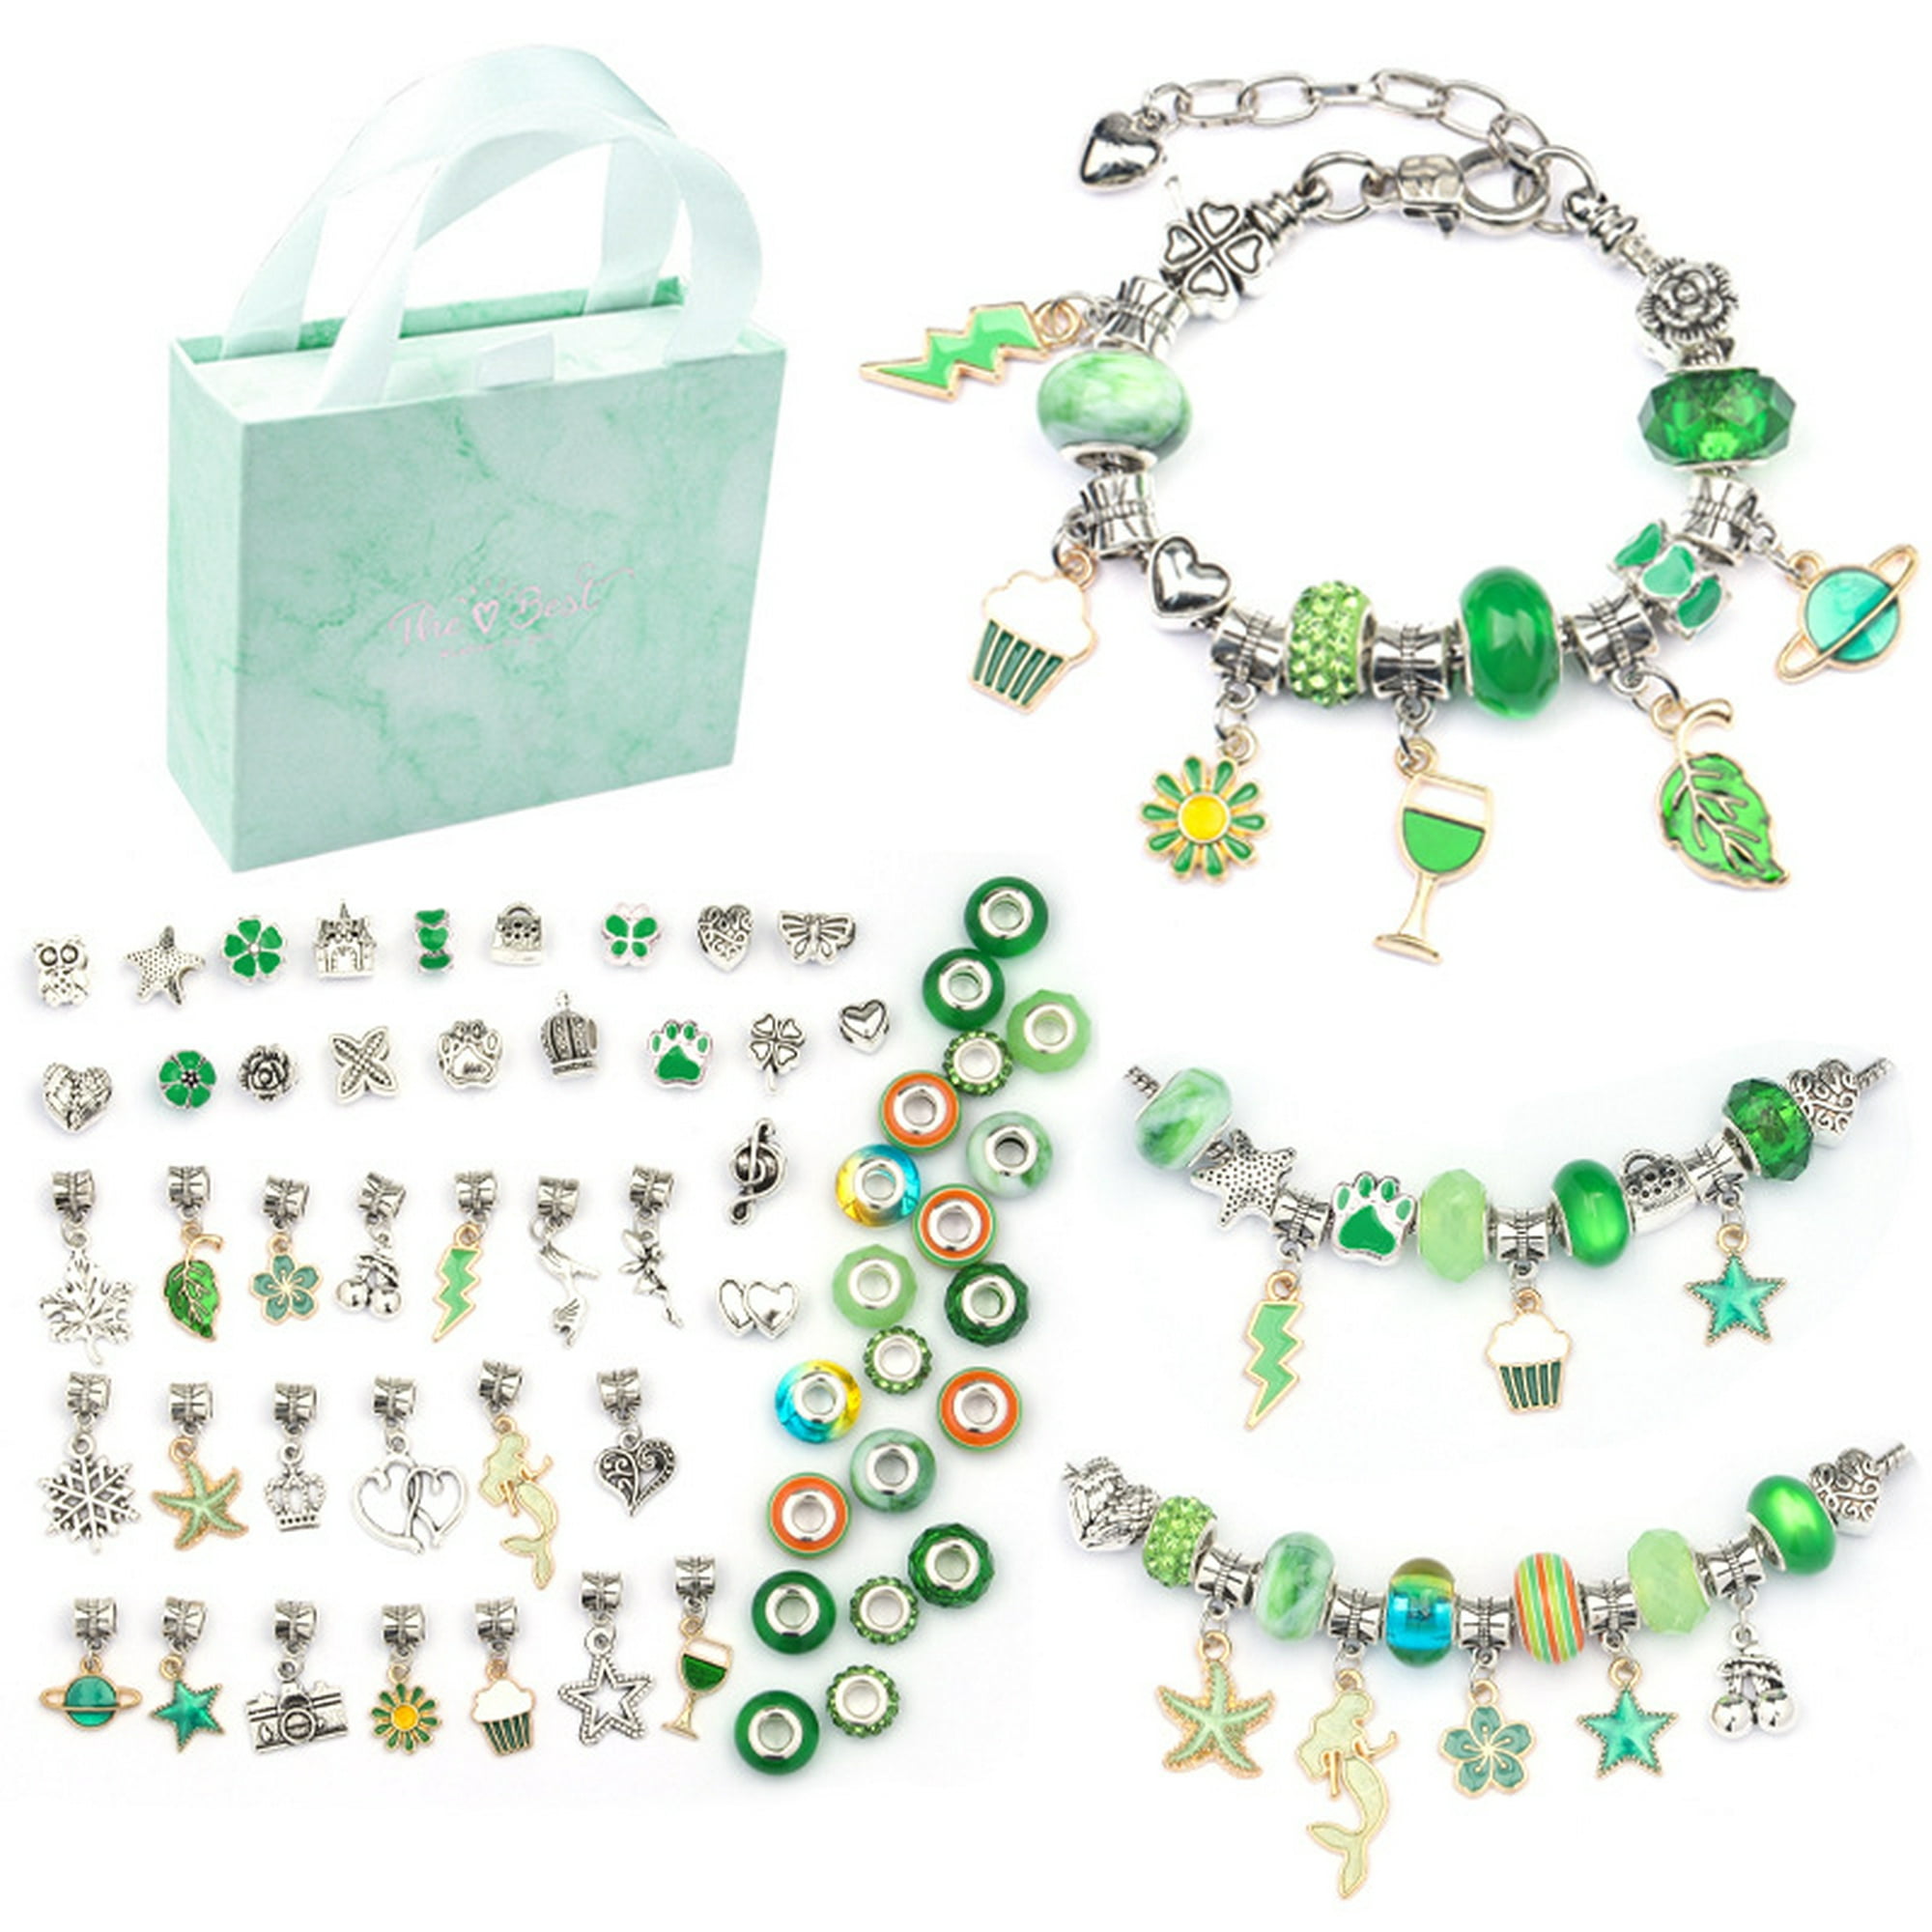 Charm Bracelet Jewelry Making Kit With Beads Bracelets Charms